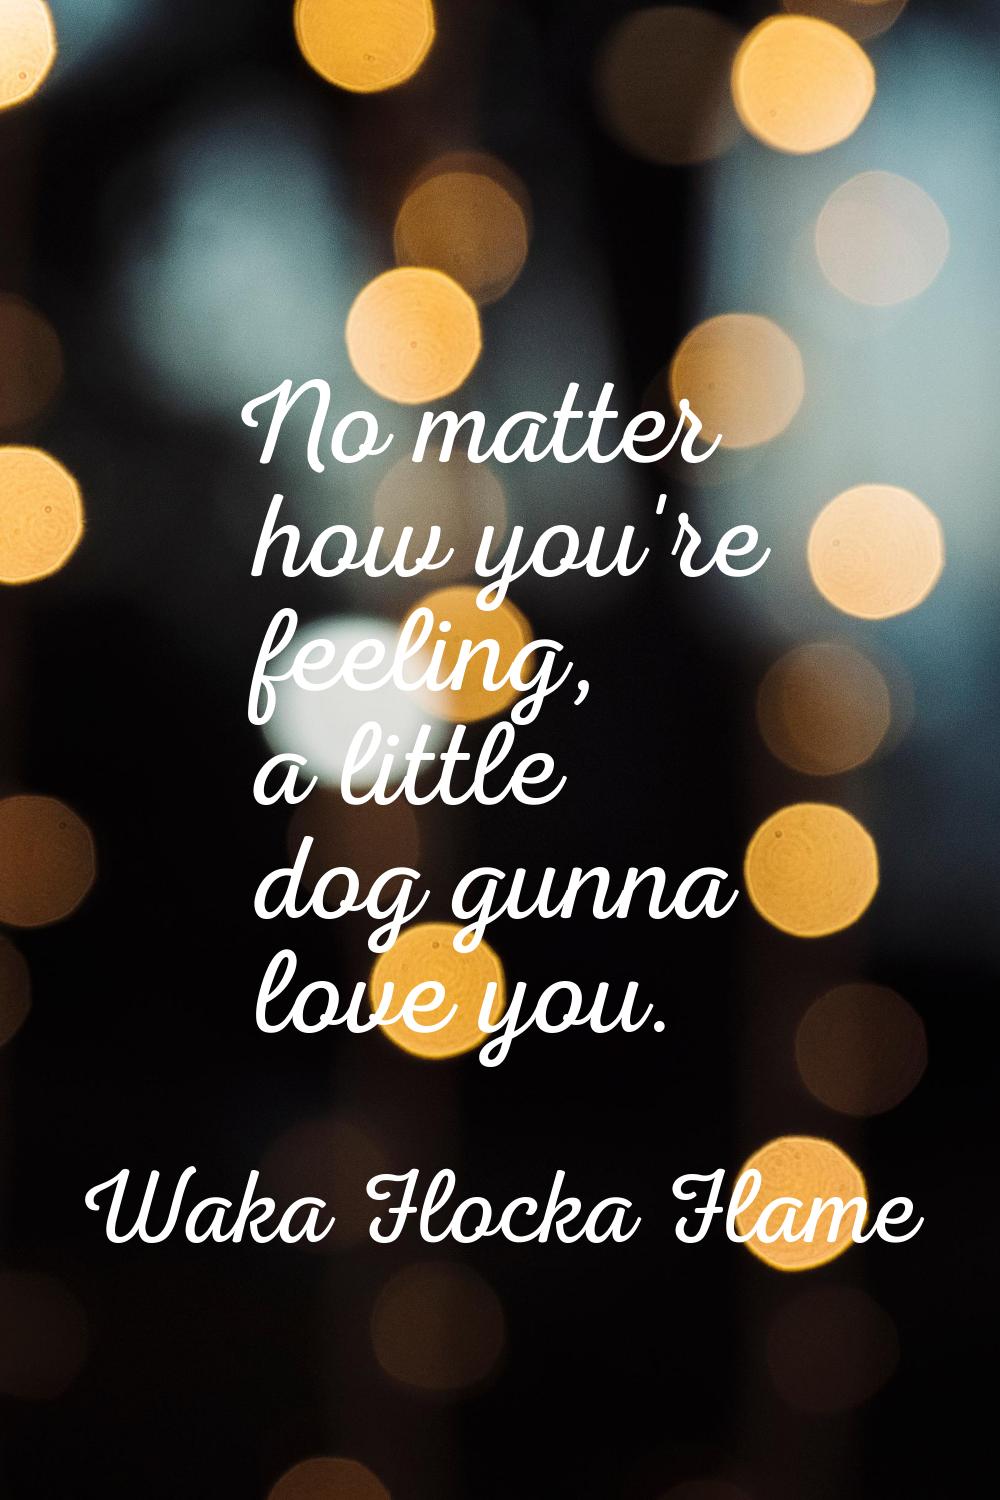 No matter how you're feeling, a little dog gunna love you.